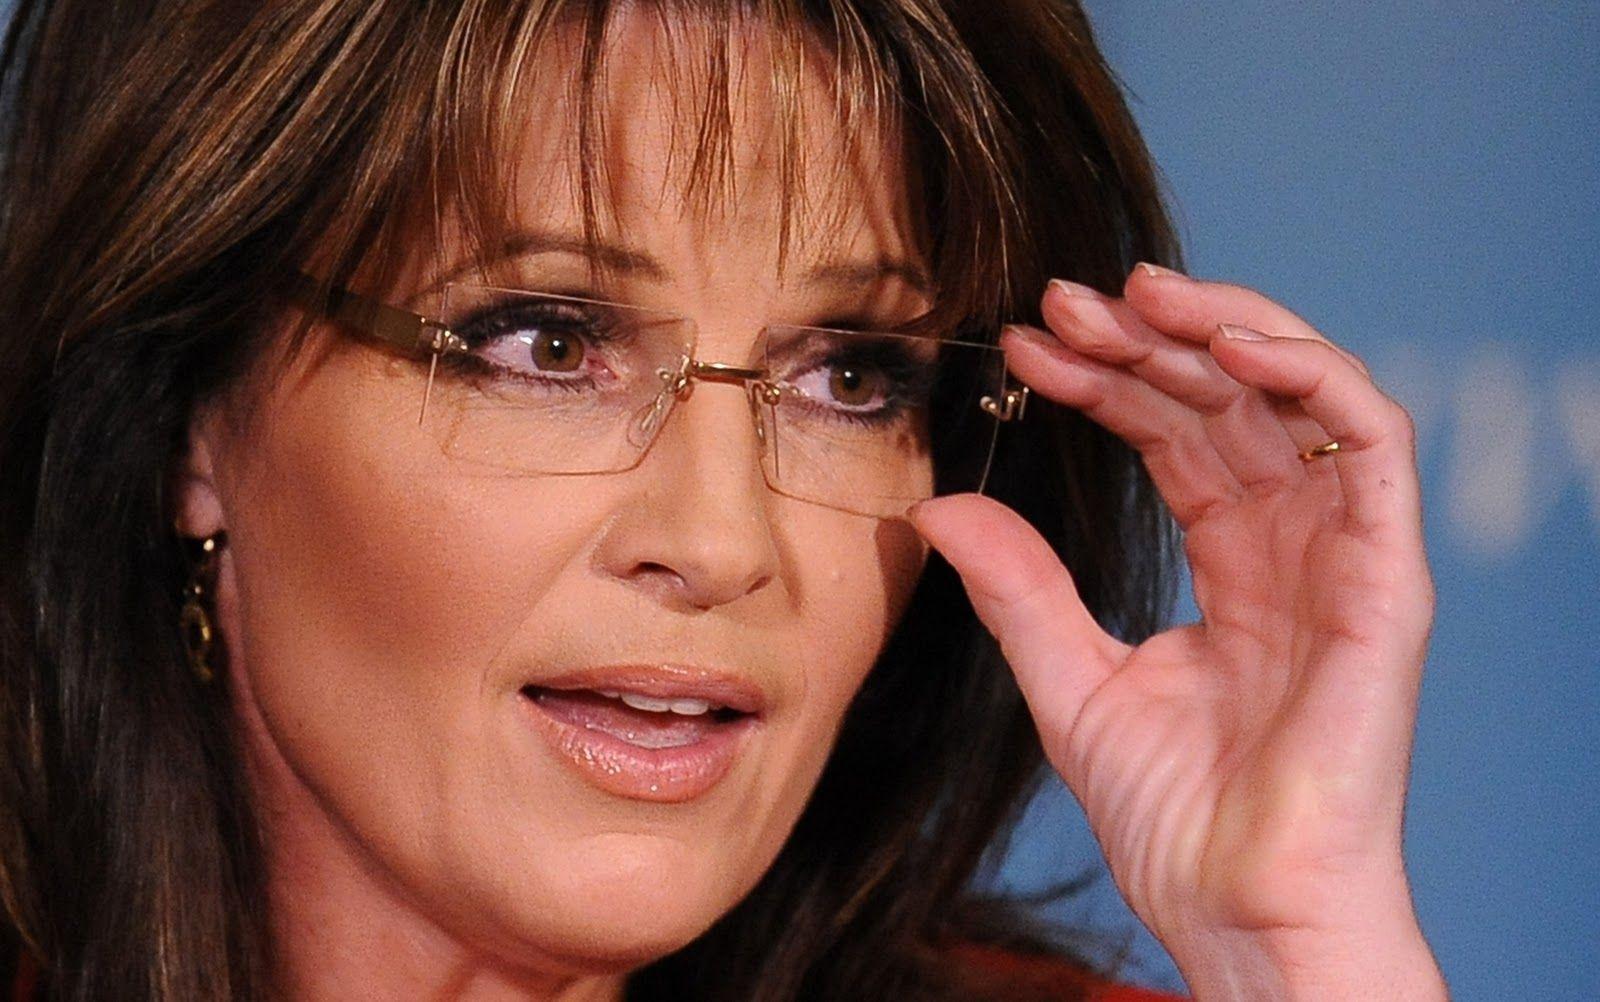 Sarah Palin: This isn't racist, but it's Pretty Ignorant